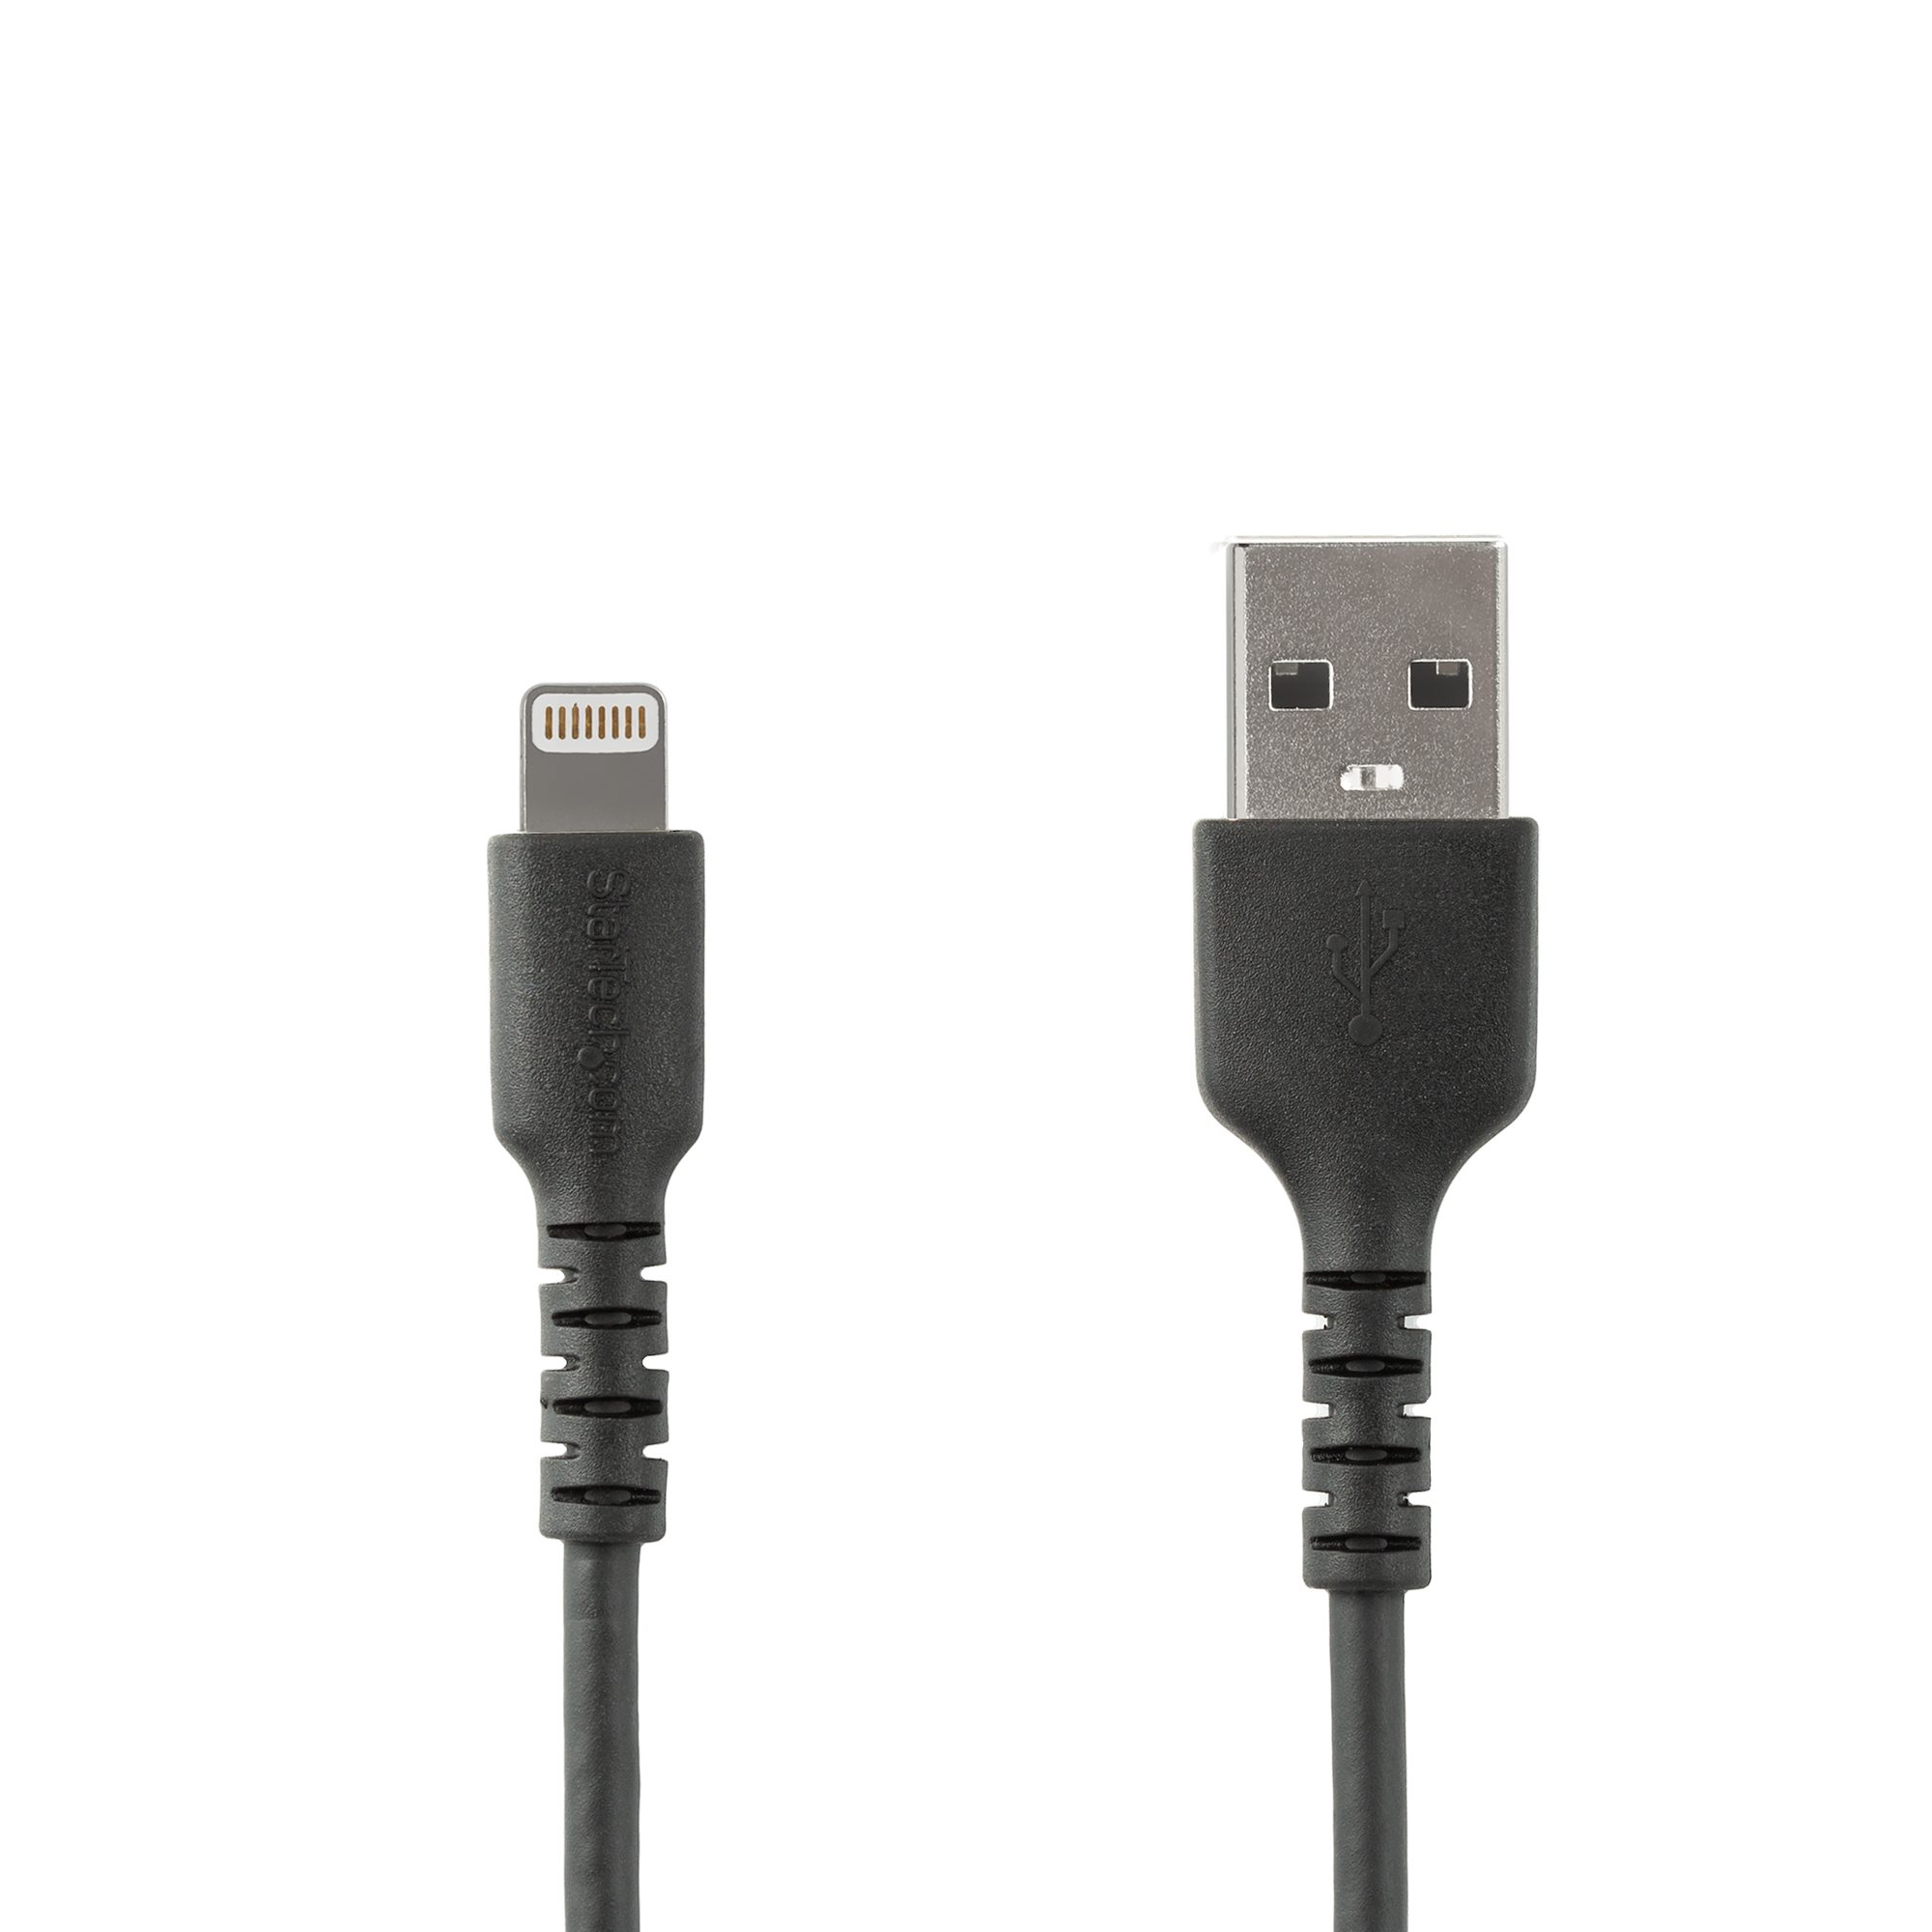 Lightning / HDMI, VGA, Audio, MicroUSB Adapter - iPhone, iPad